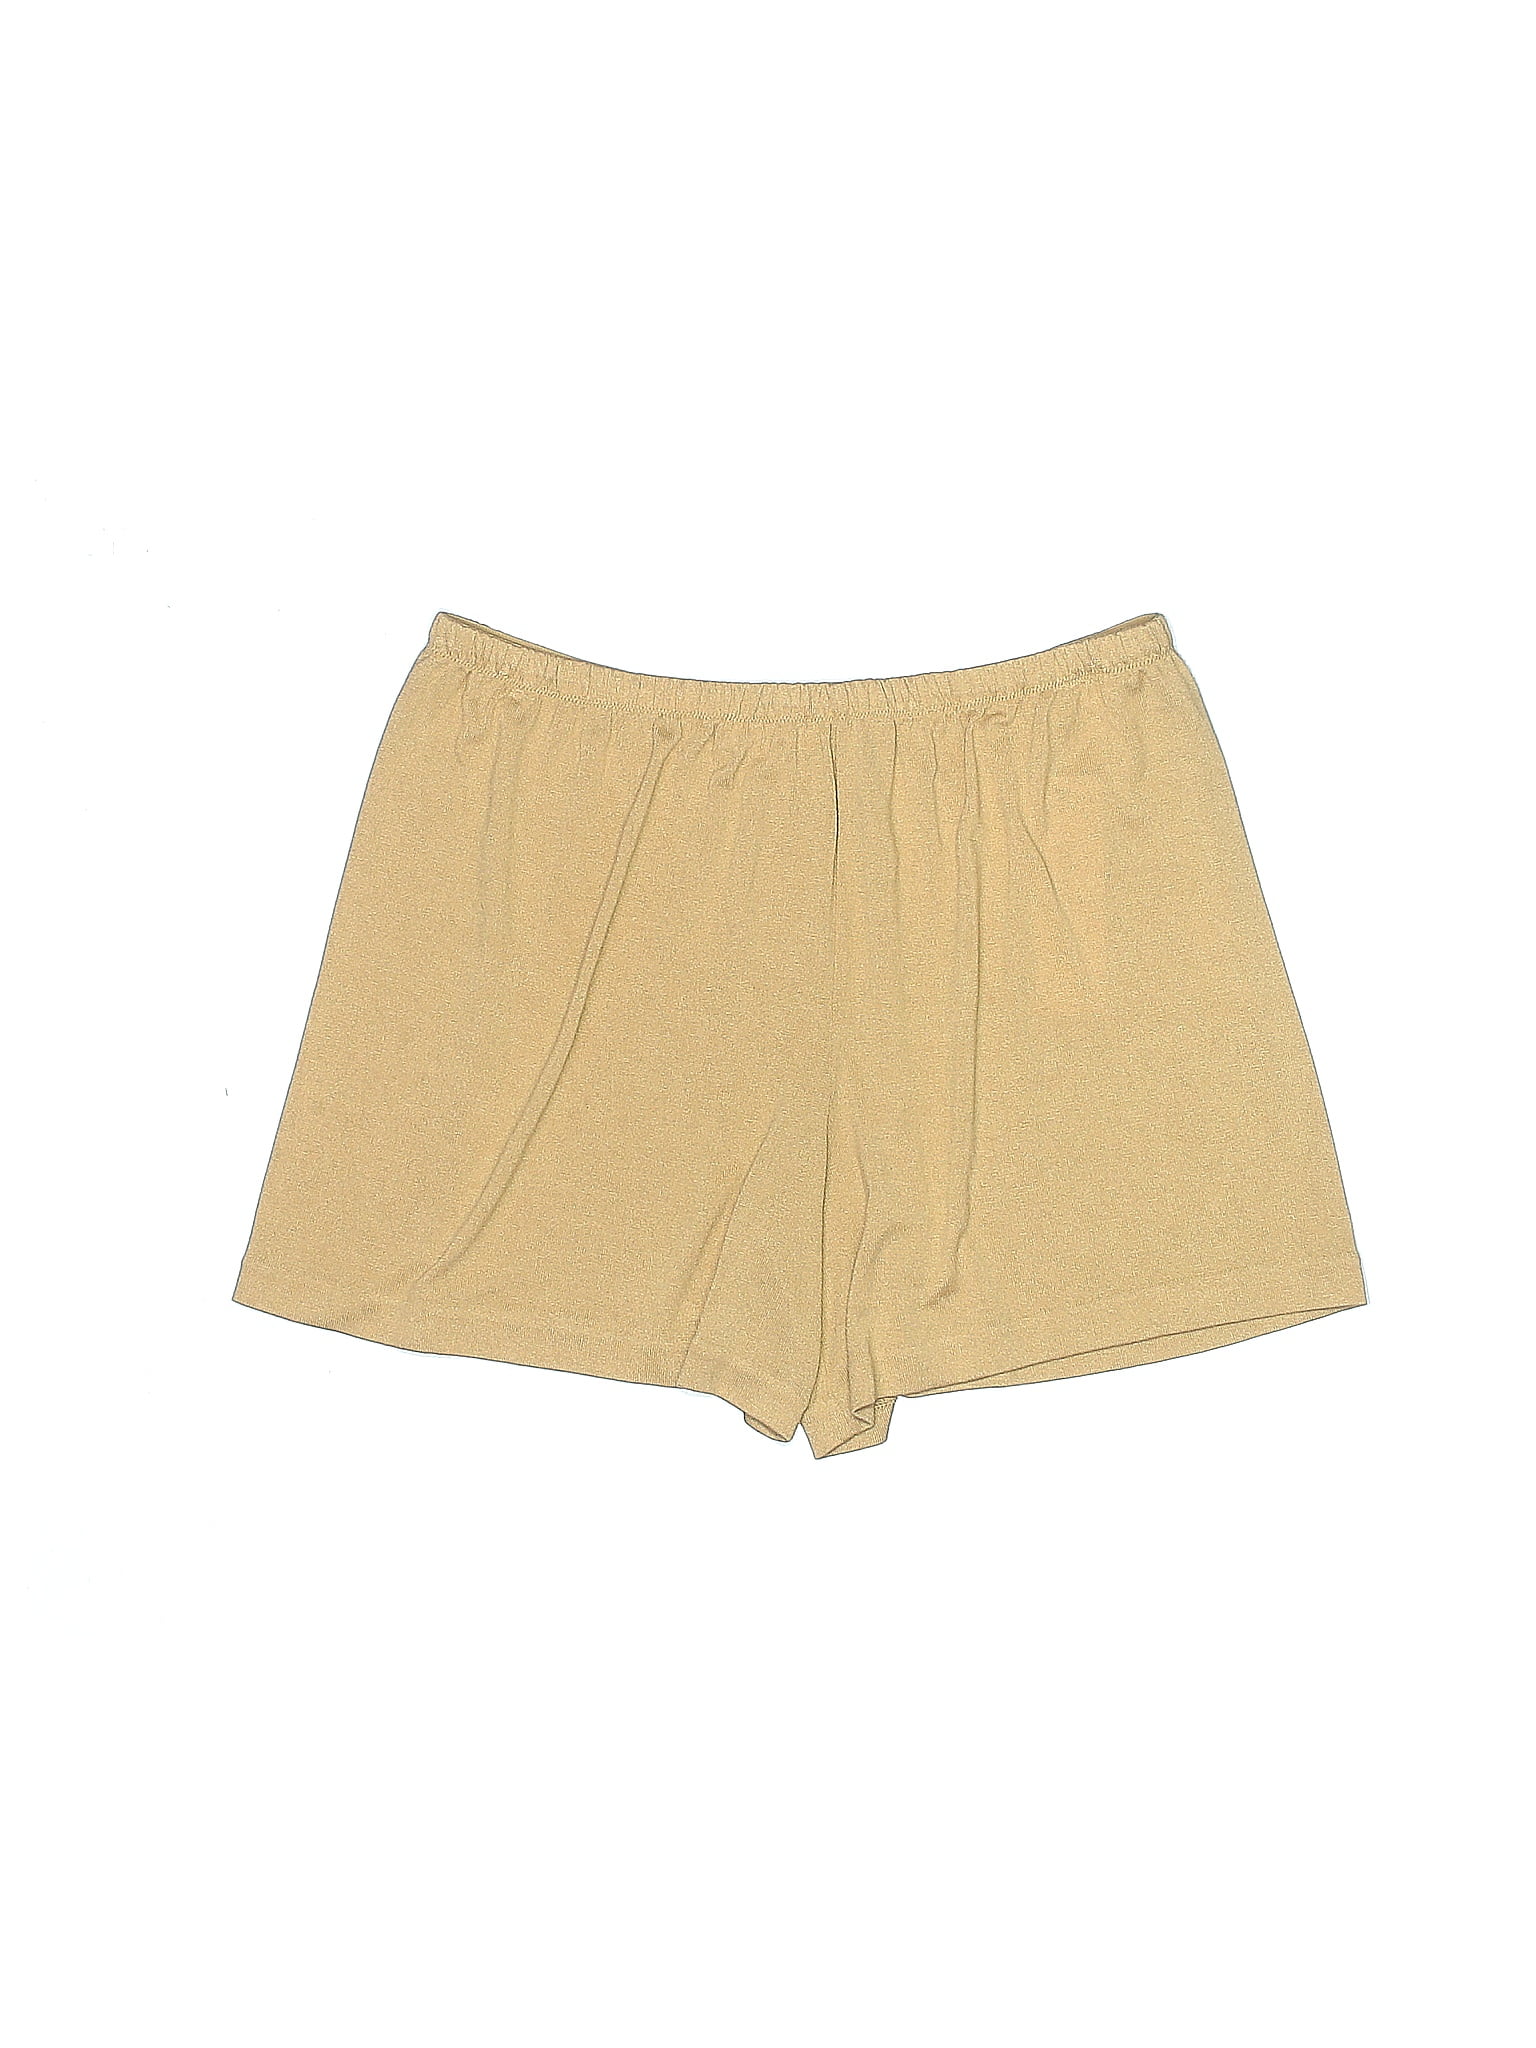 Vince. Solid Tan Gold Shorts Size L - 76% off | ThredUp